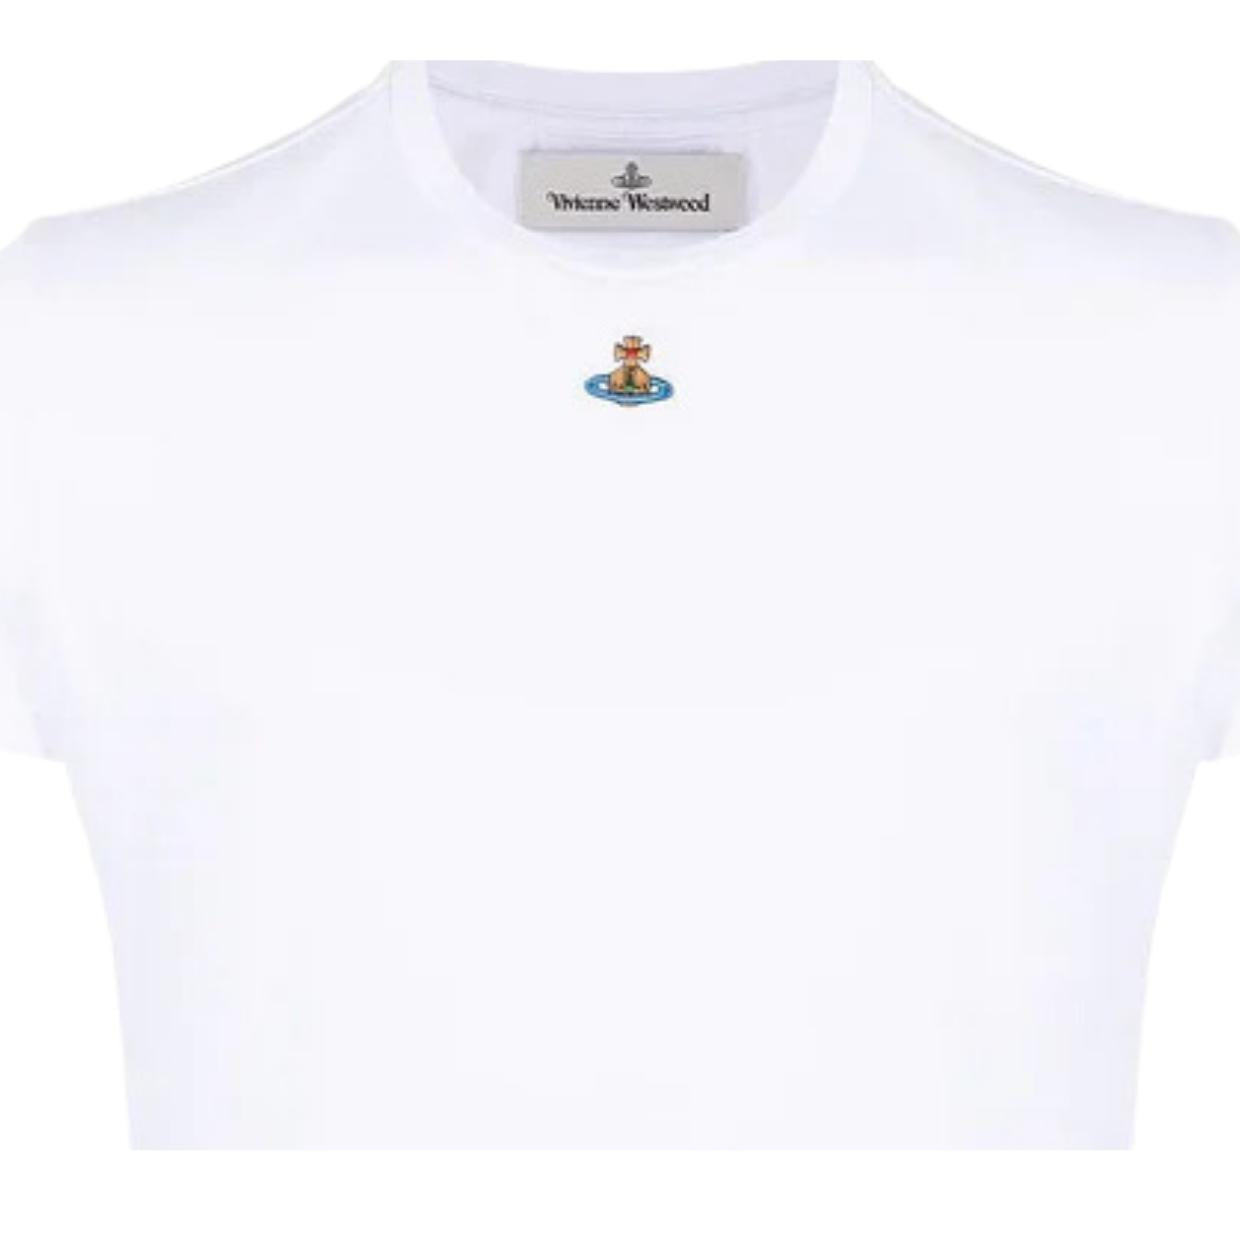 Vivienne Westwood Orb Peru White T-Shirt